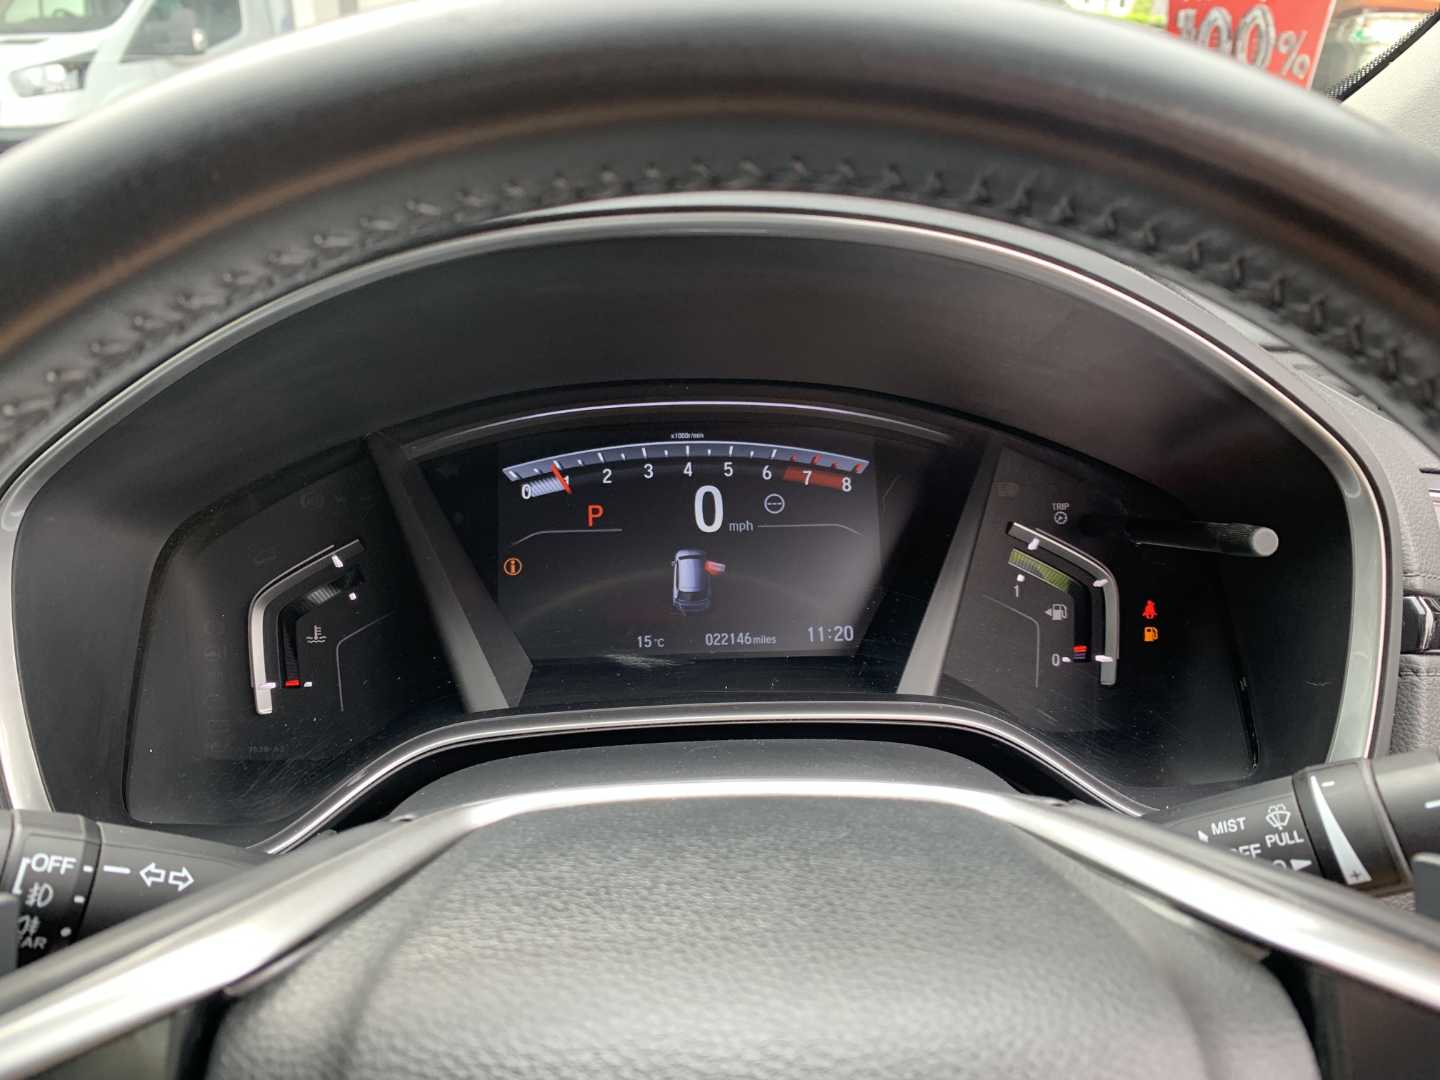 Honda CR-V 1.5 VTEC Turbo SE 5dr CVT - Image 11